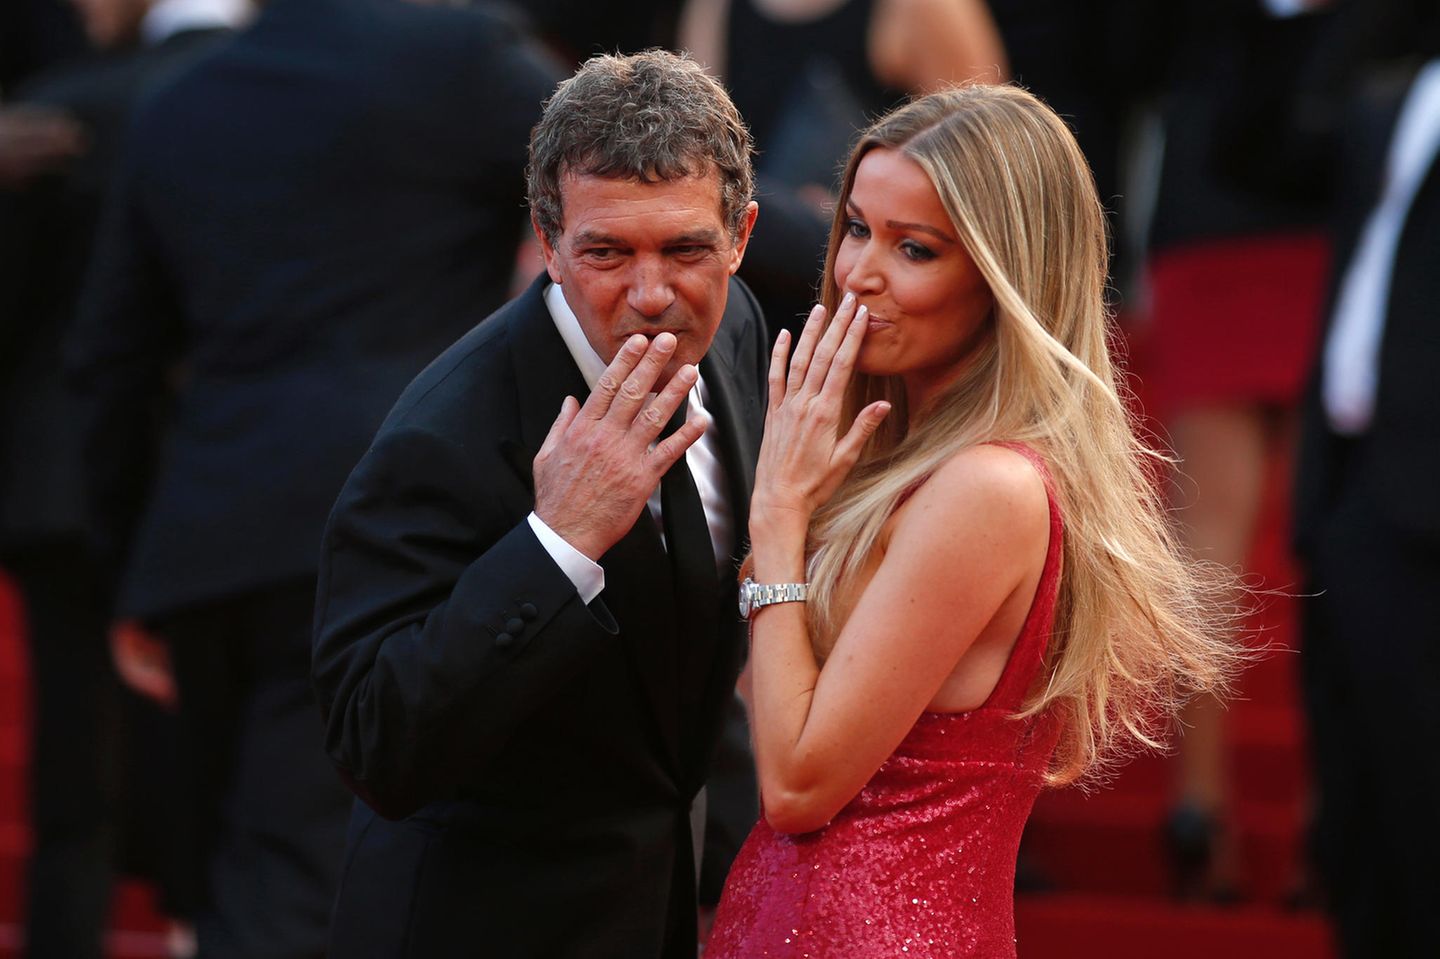 Antonio Banderas und Freundin Nicole in Cannes